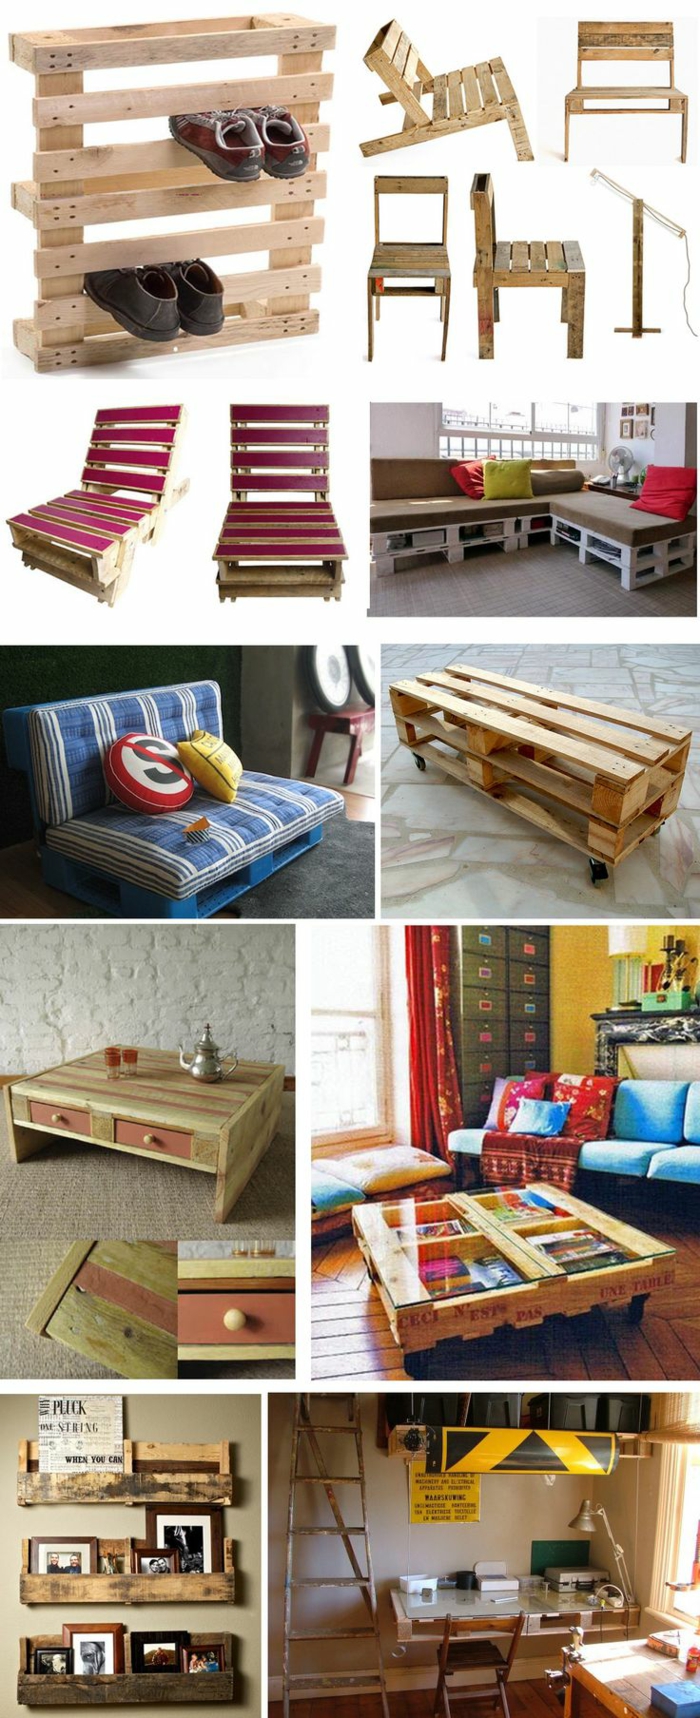 europalette ξύλινα παλέτα έπιπλα DIY ιδέες καναπέδες καναπέδες ράφια τοίχου